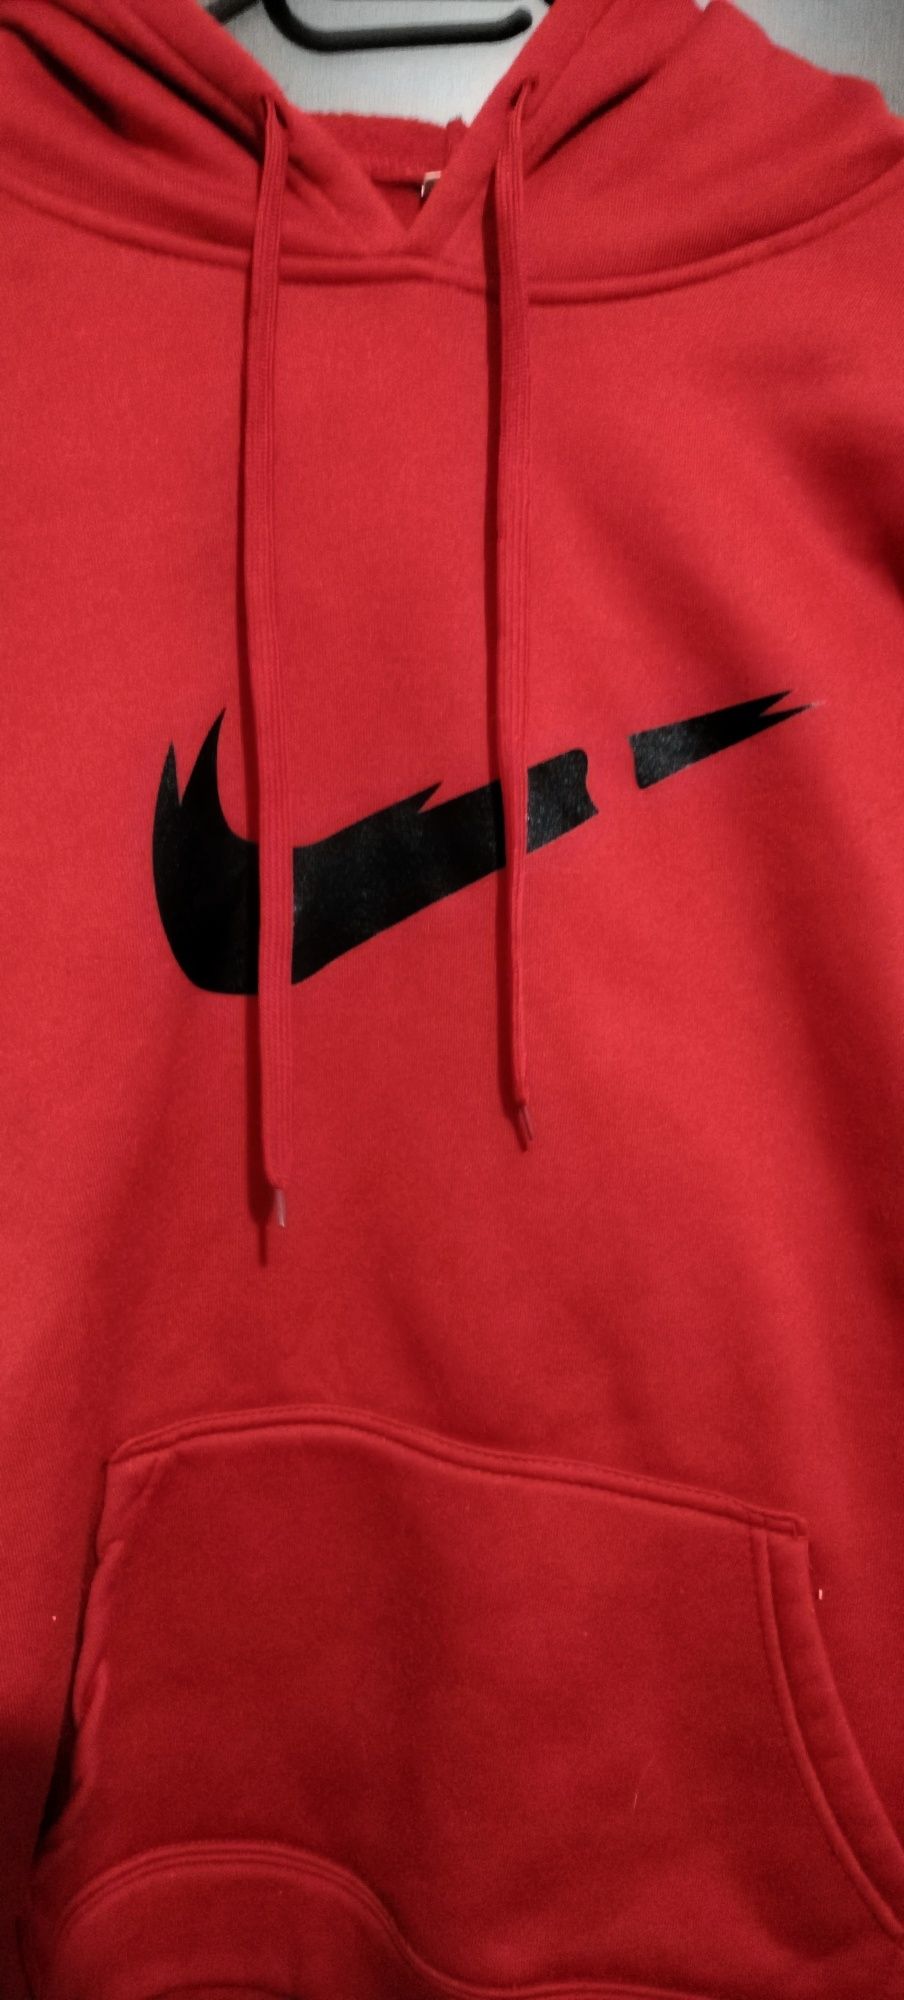 Hanorac Nike L rosu